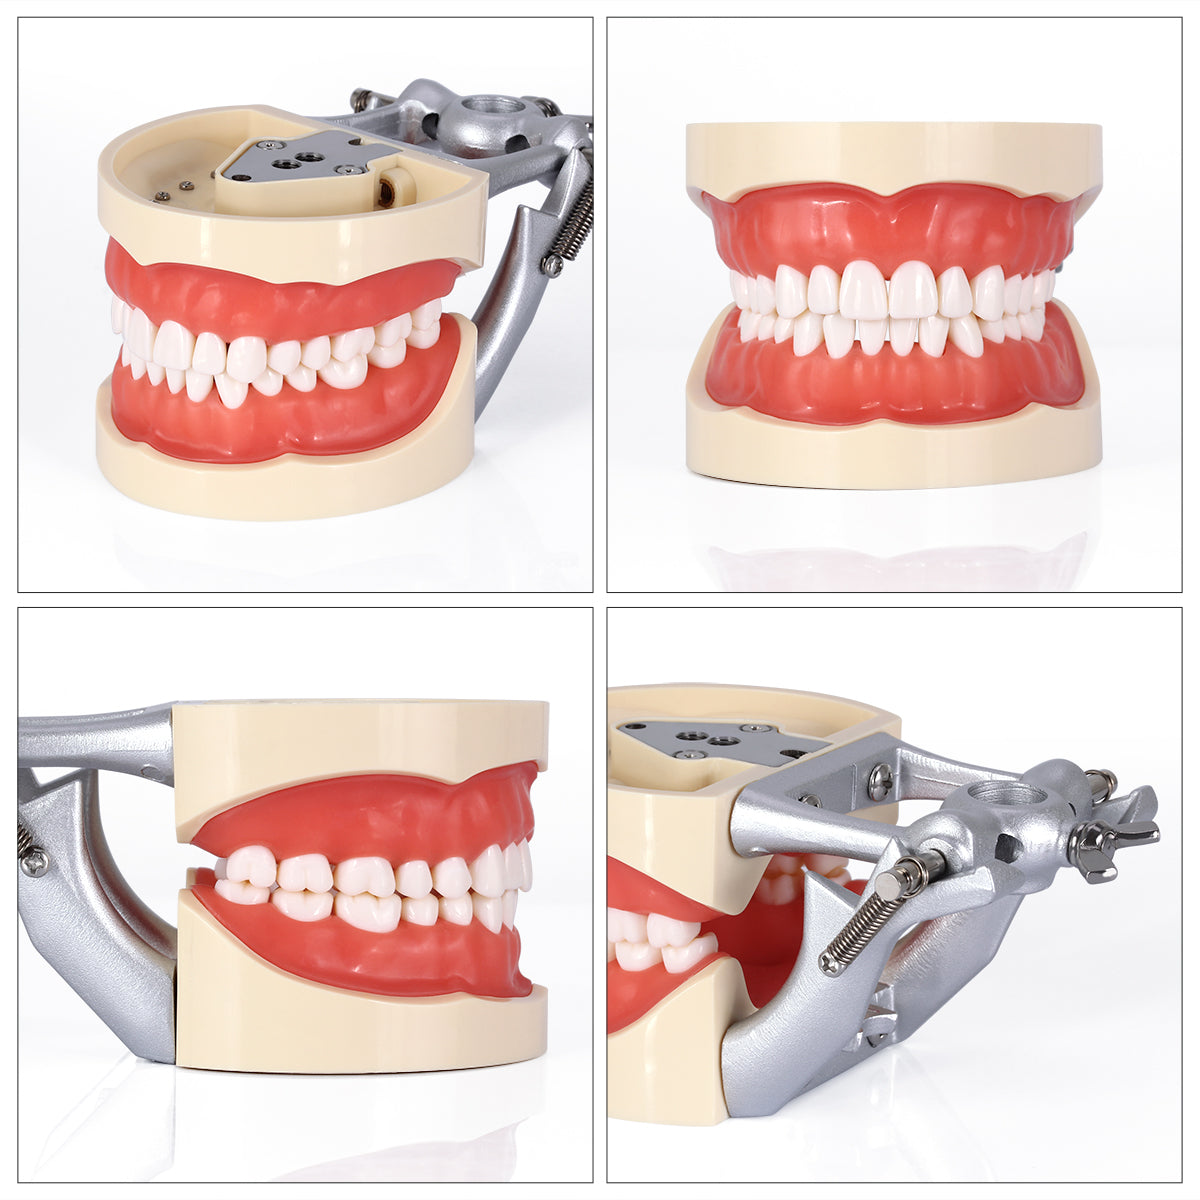 Dental Teeth Model With Removable Teeth